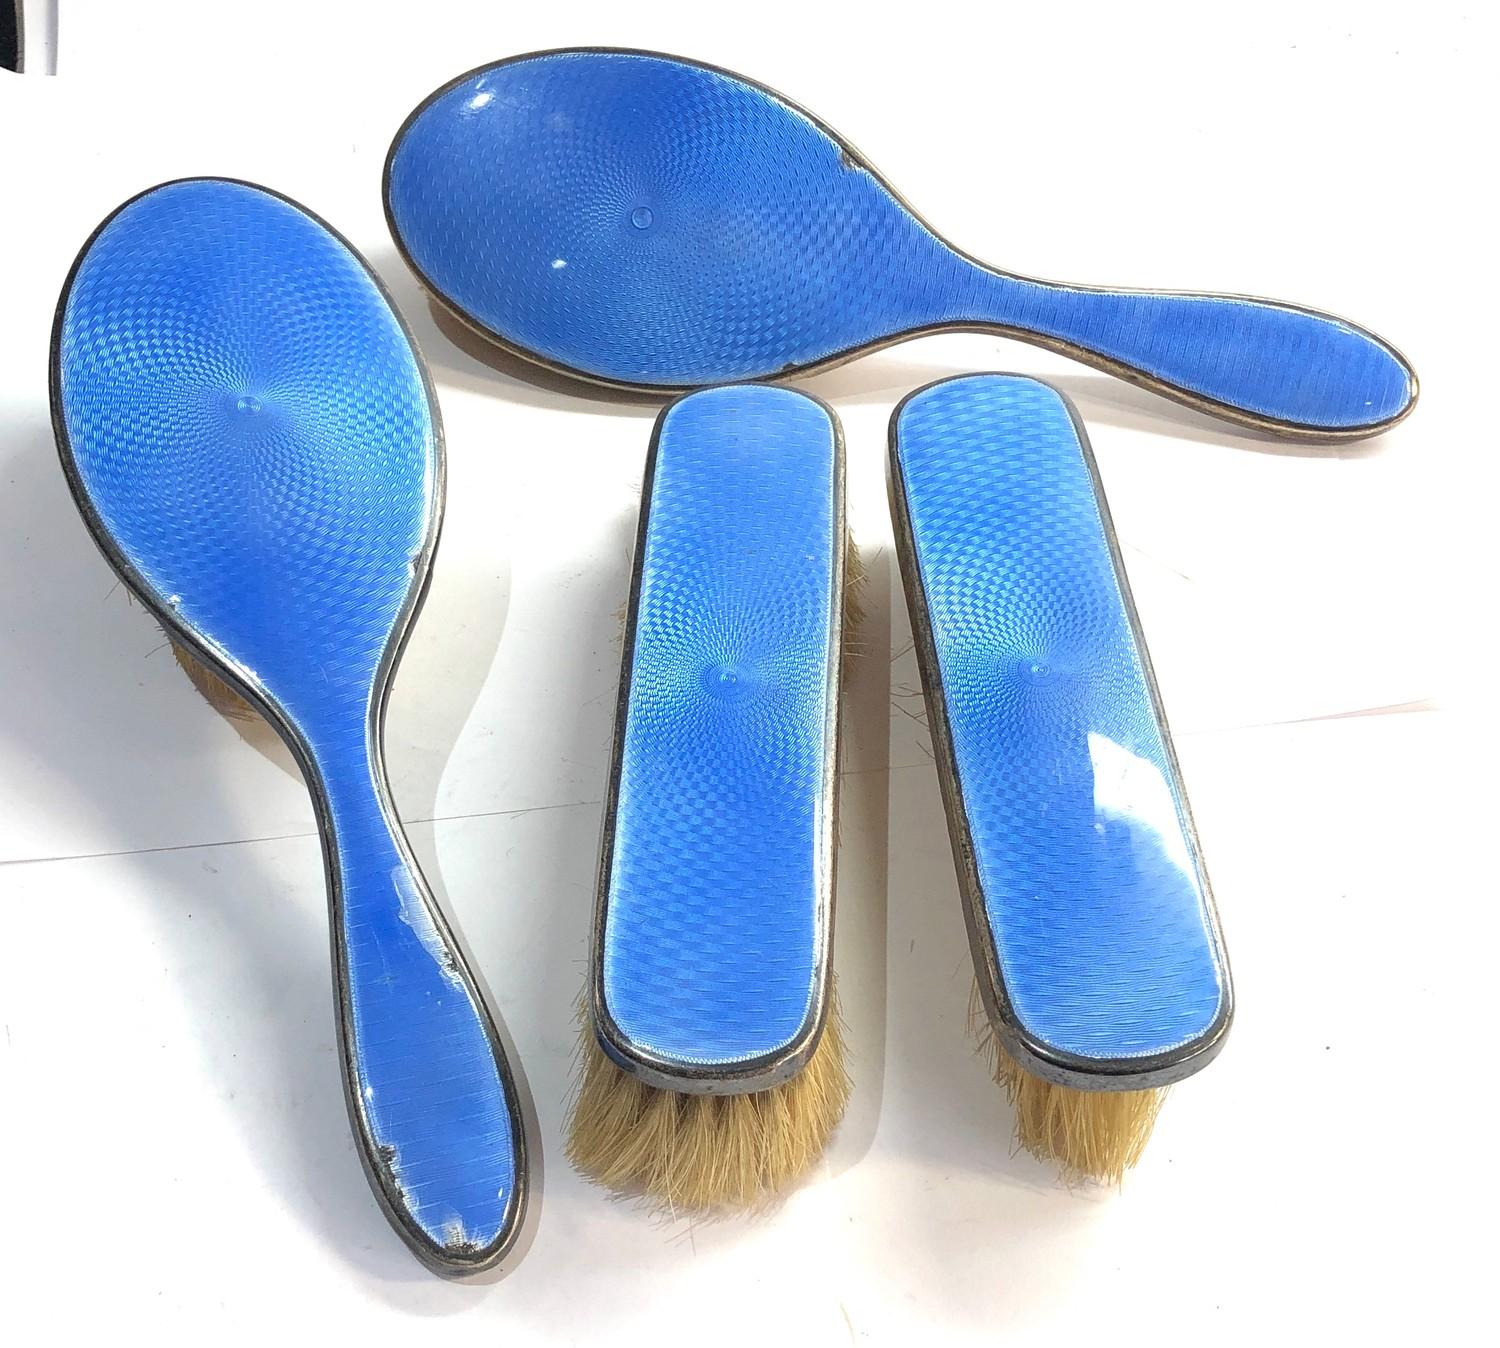 Antique silver and blue enamel brush set